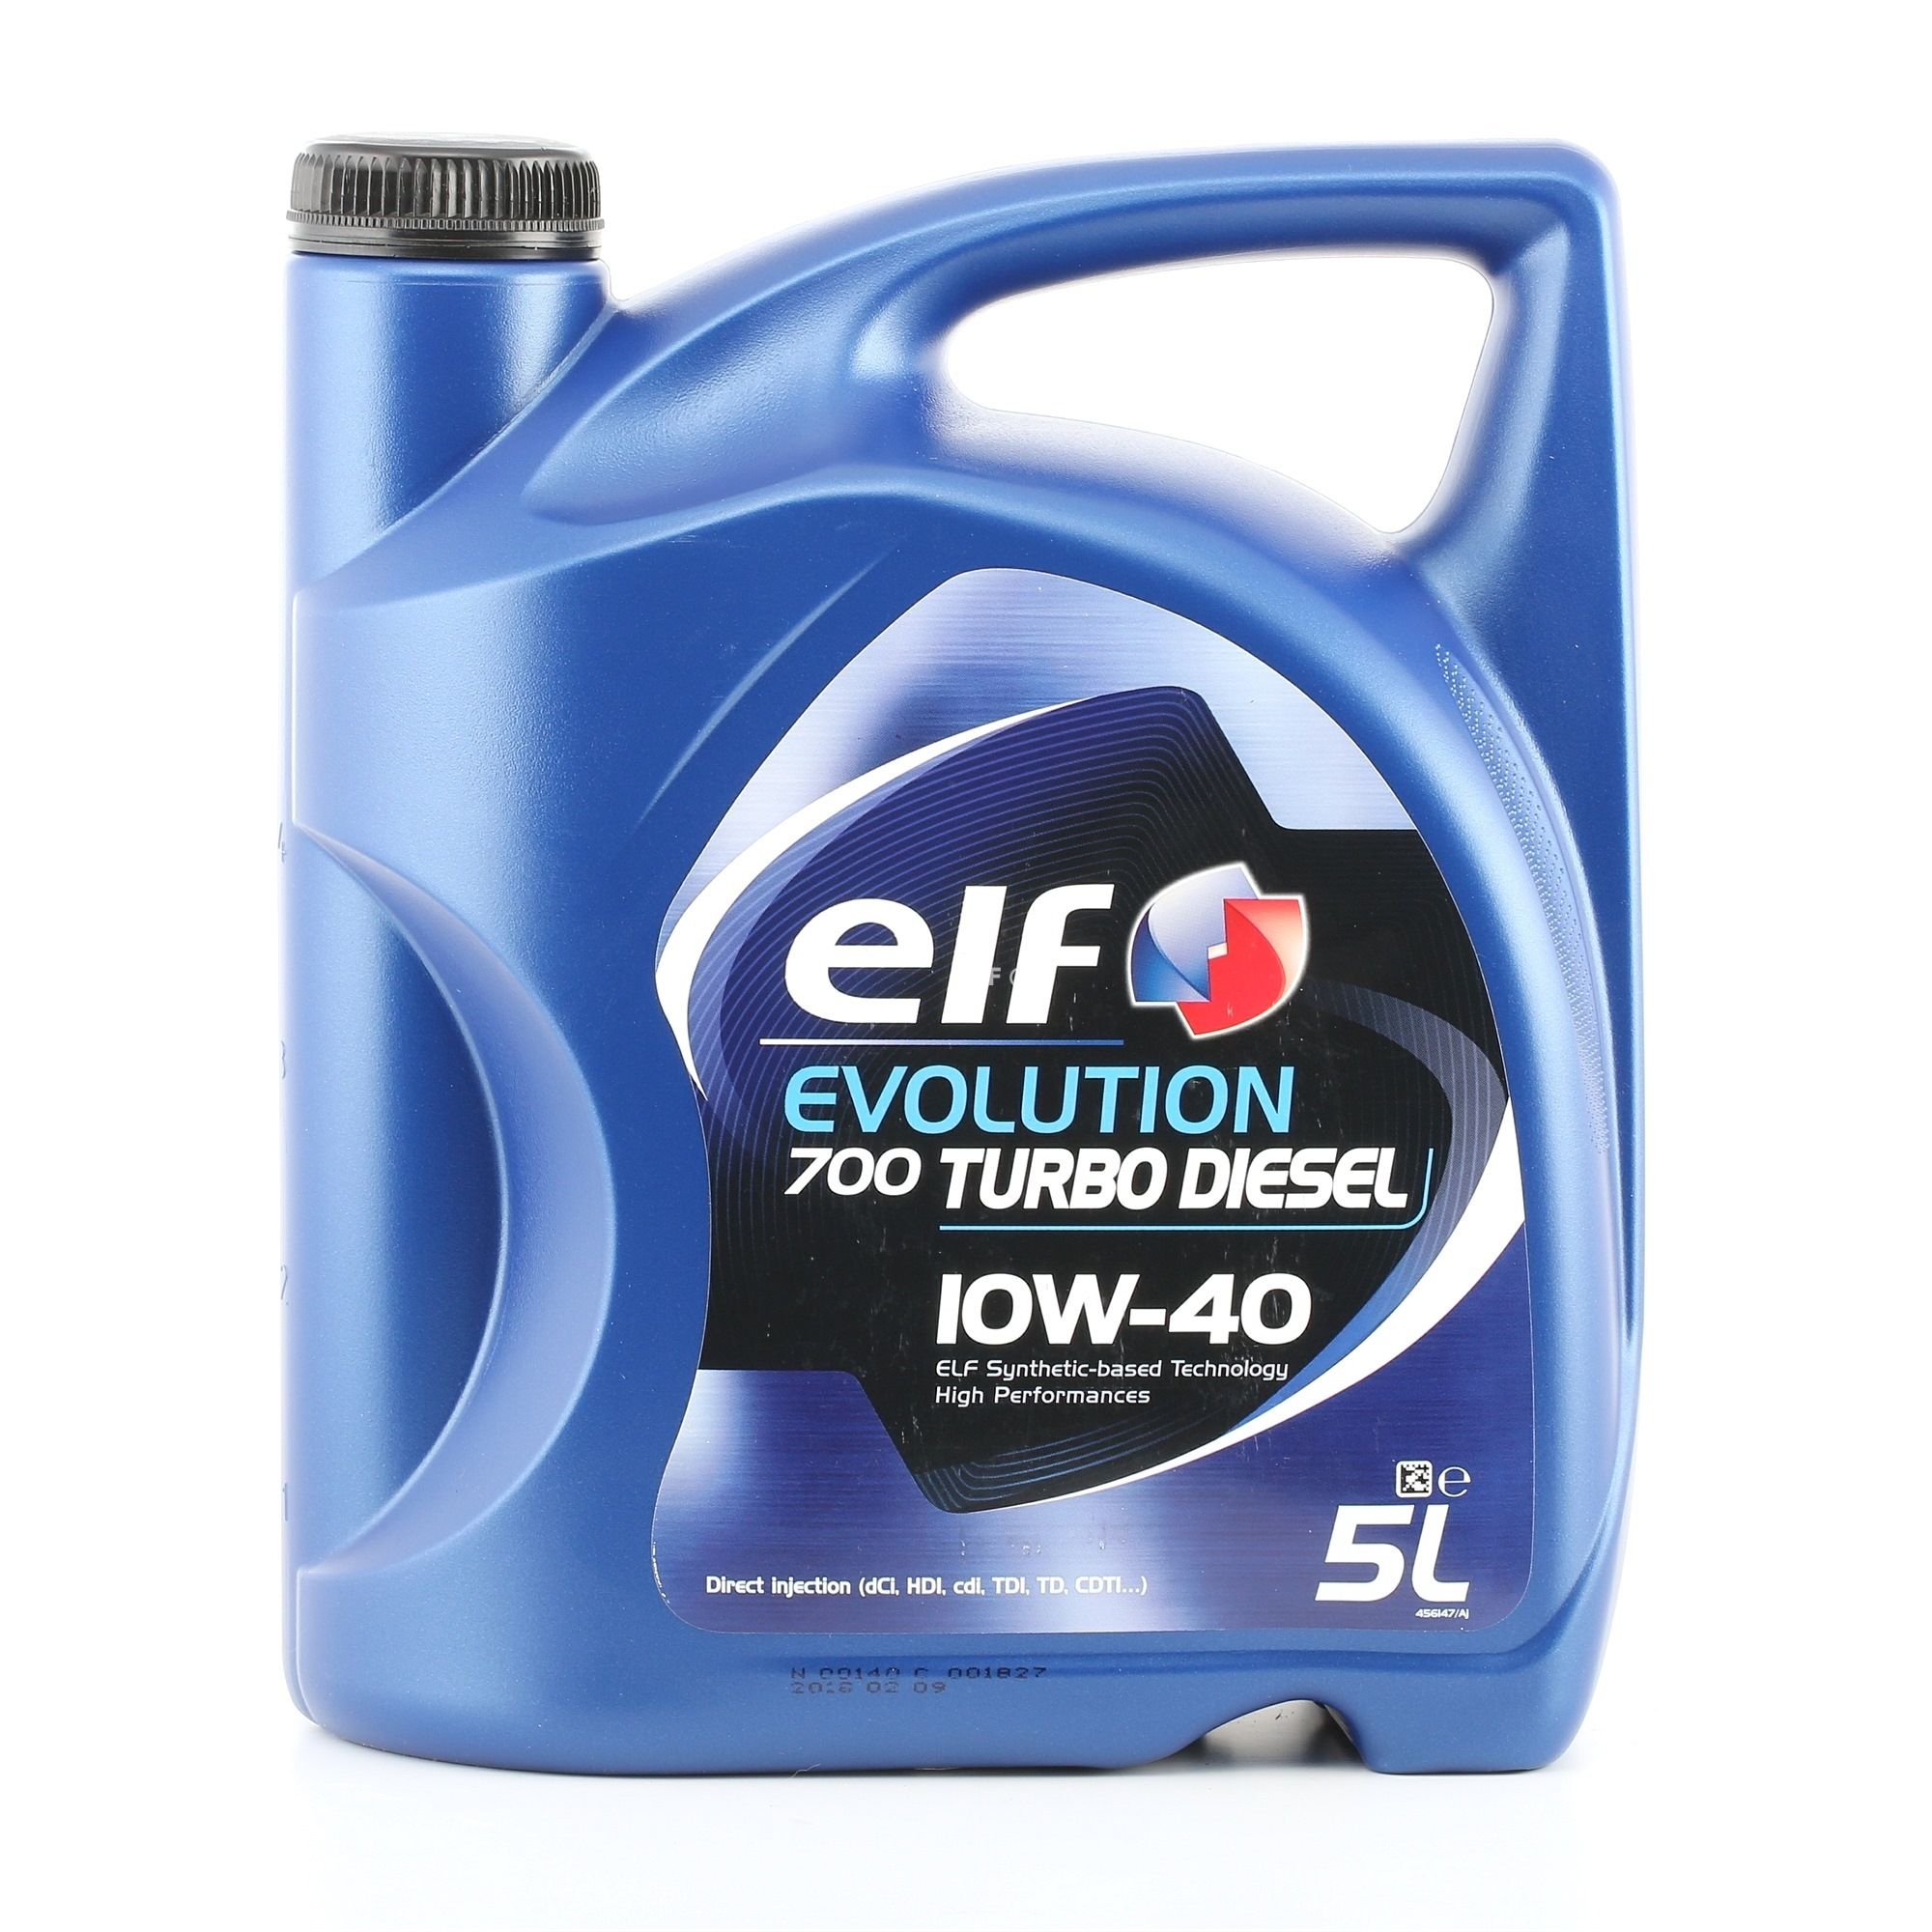 ELF Evolution, 700 Turbo Diesel 2204217 Aceite de motor 10W-40, 5L, aceite parcialmente sintético